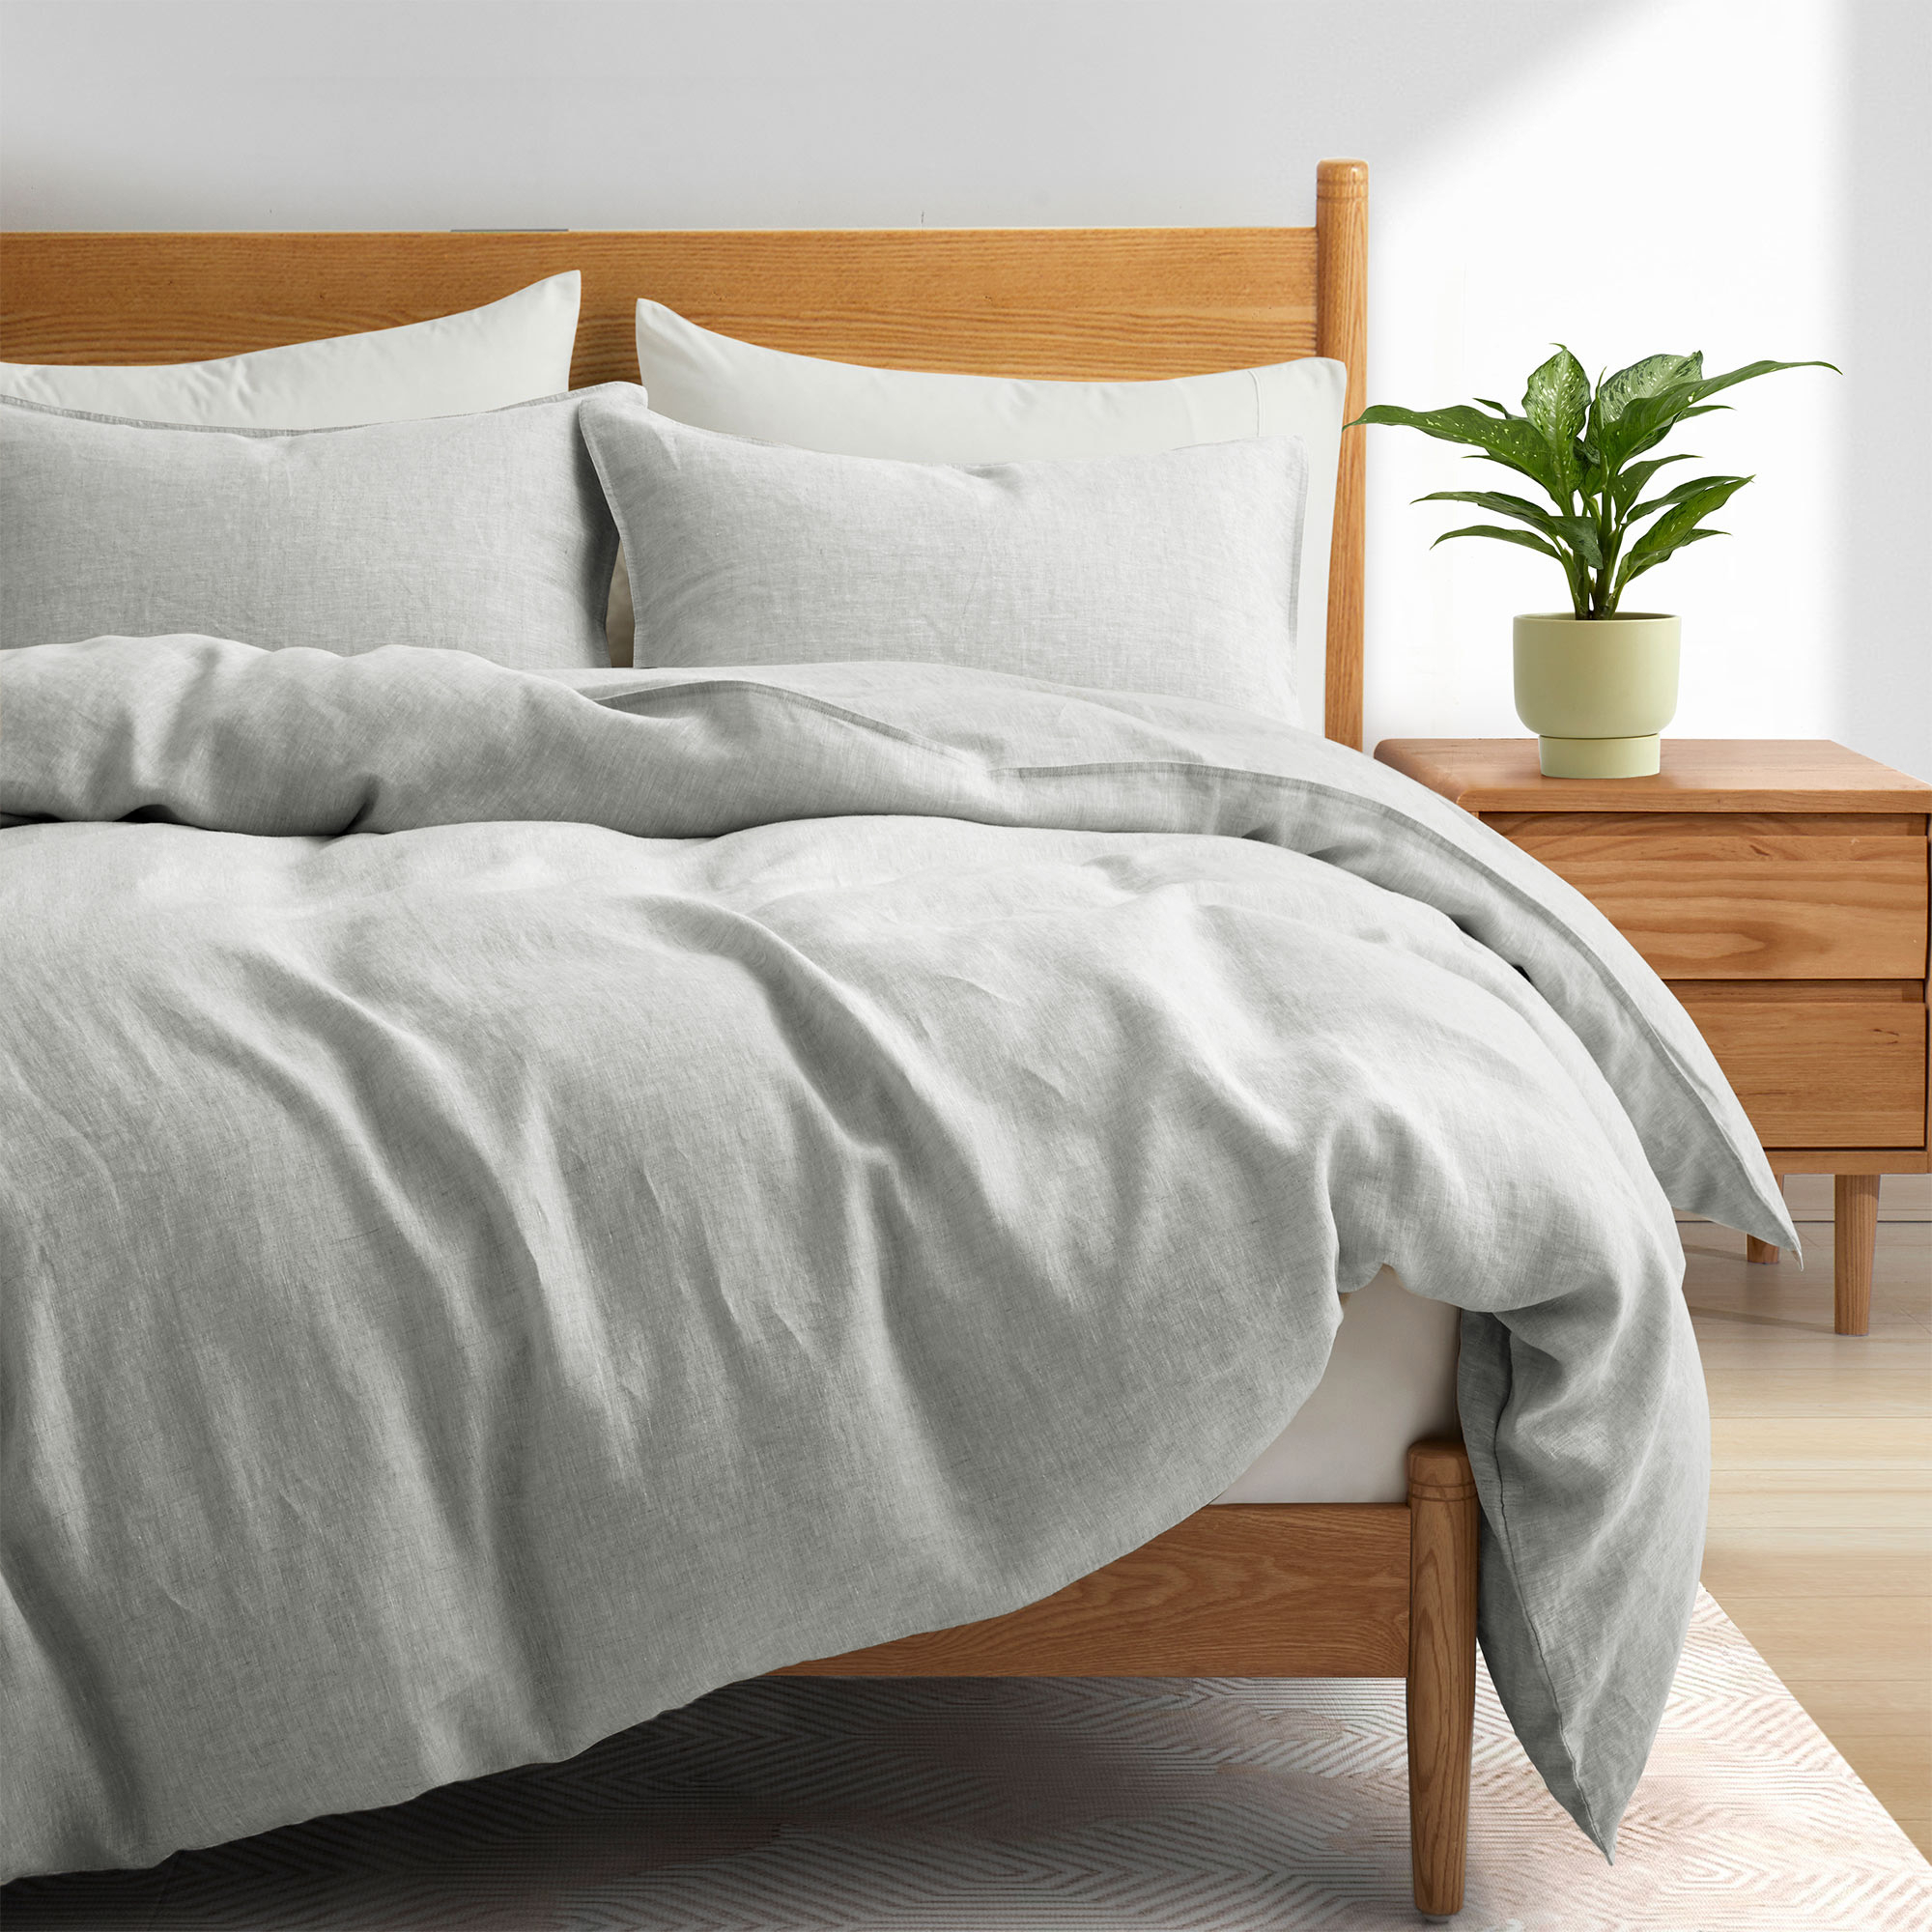 Premium Flax Linen Duvet Cover Set With Pillow Shams Breathable Moisture Wicking Bedding Set - Light Gray, Full/Queen